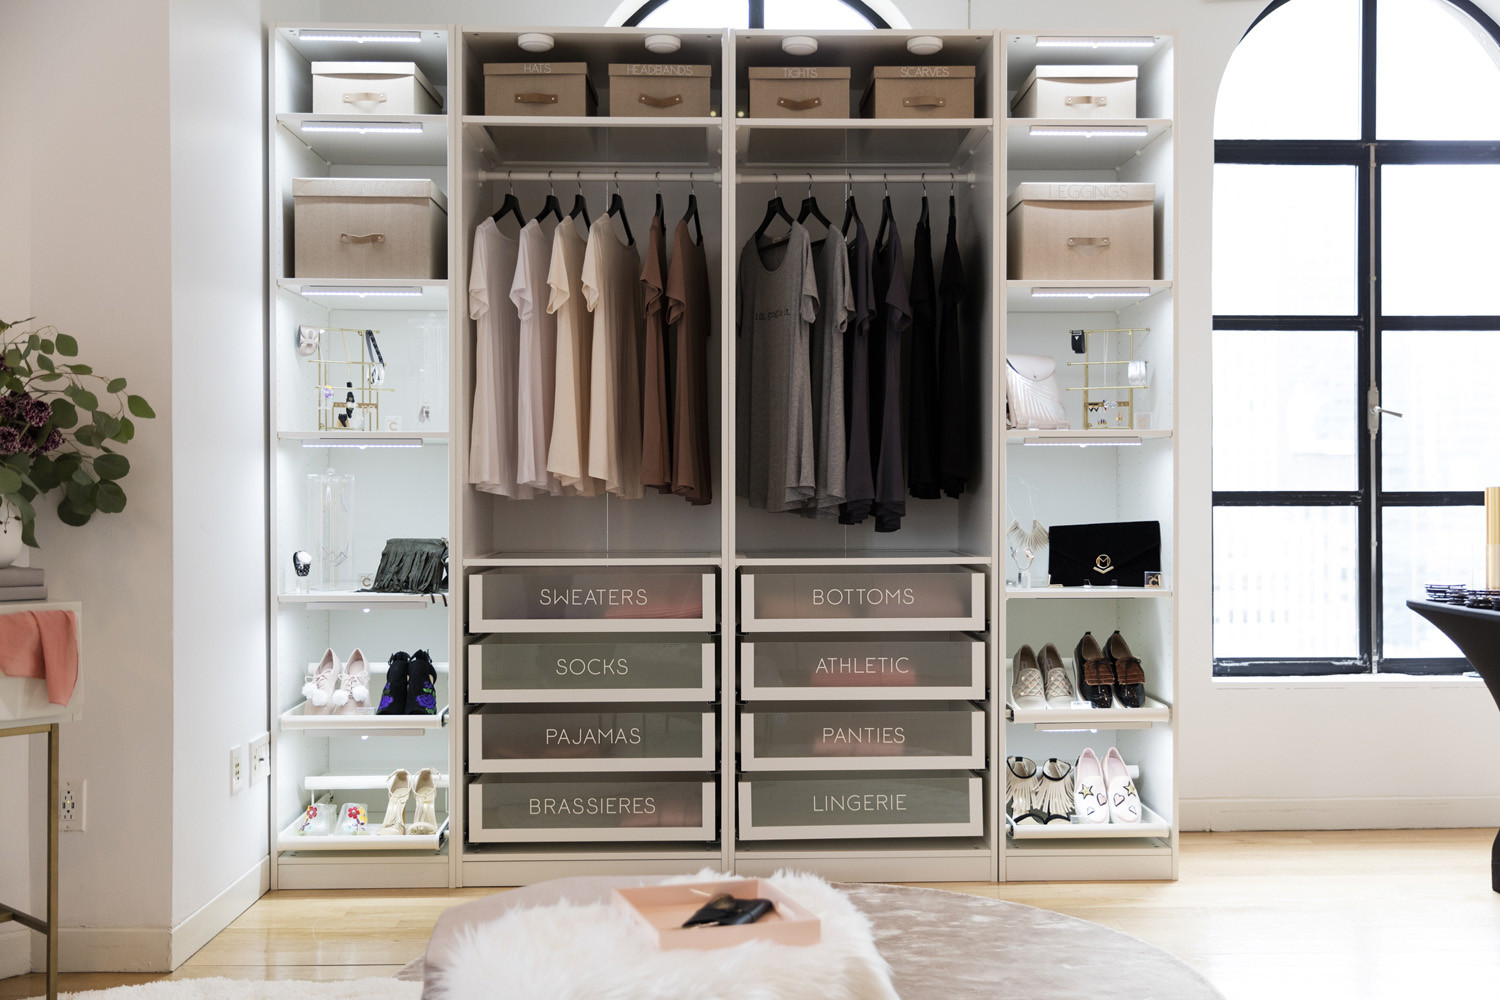 DIY Closet Organization Plans
 Closet Organization – 4 DIY Ideas to Organize your Closet